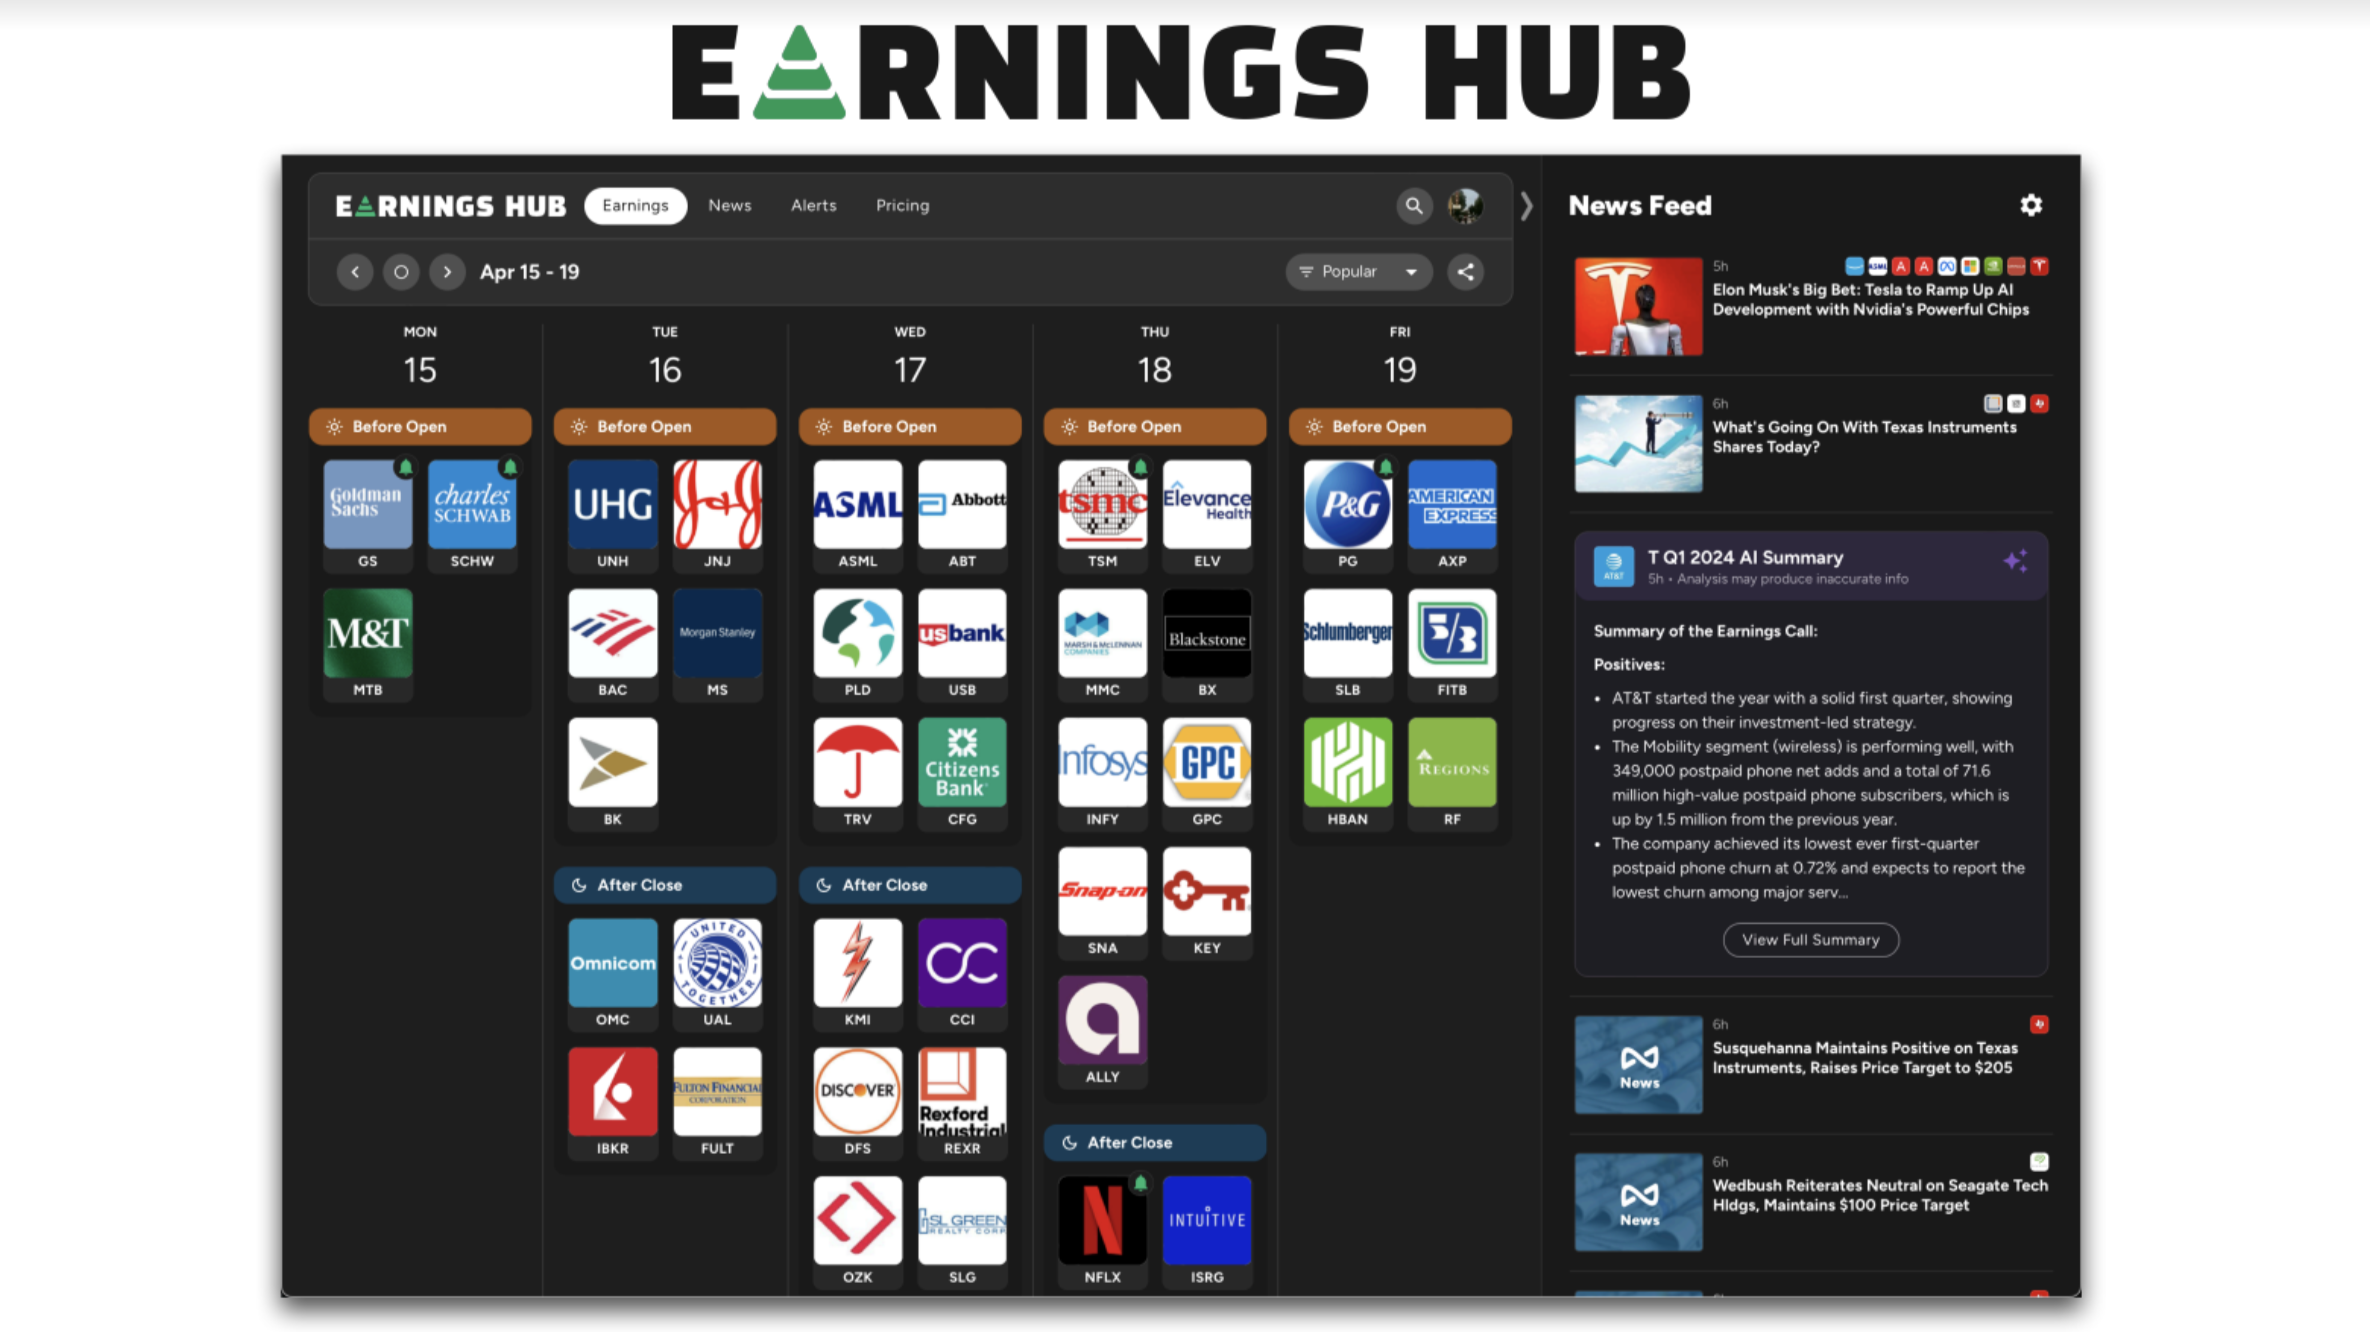 earnings-hub - Free stock earnings calendar, IPOs and earnings calls